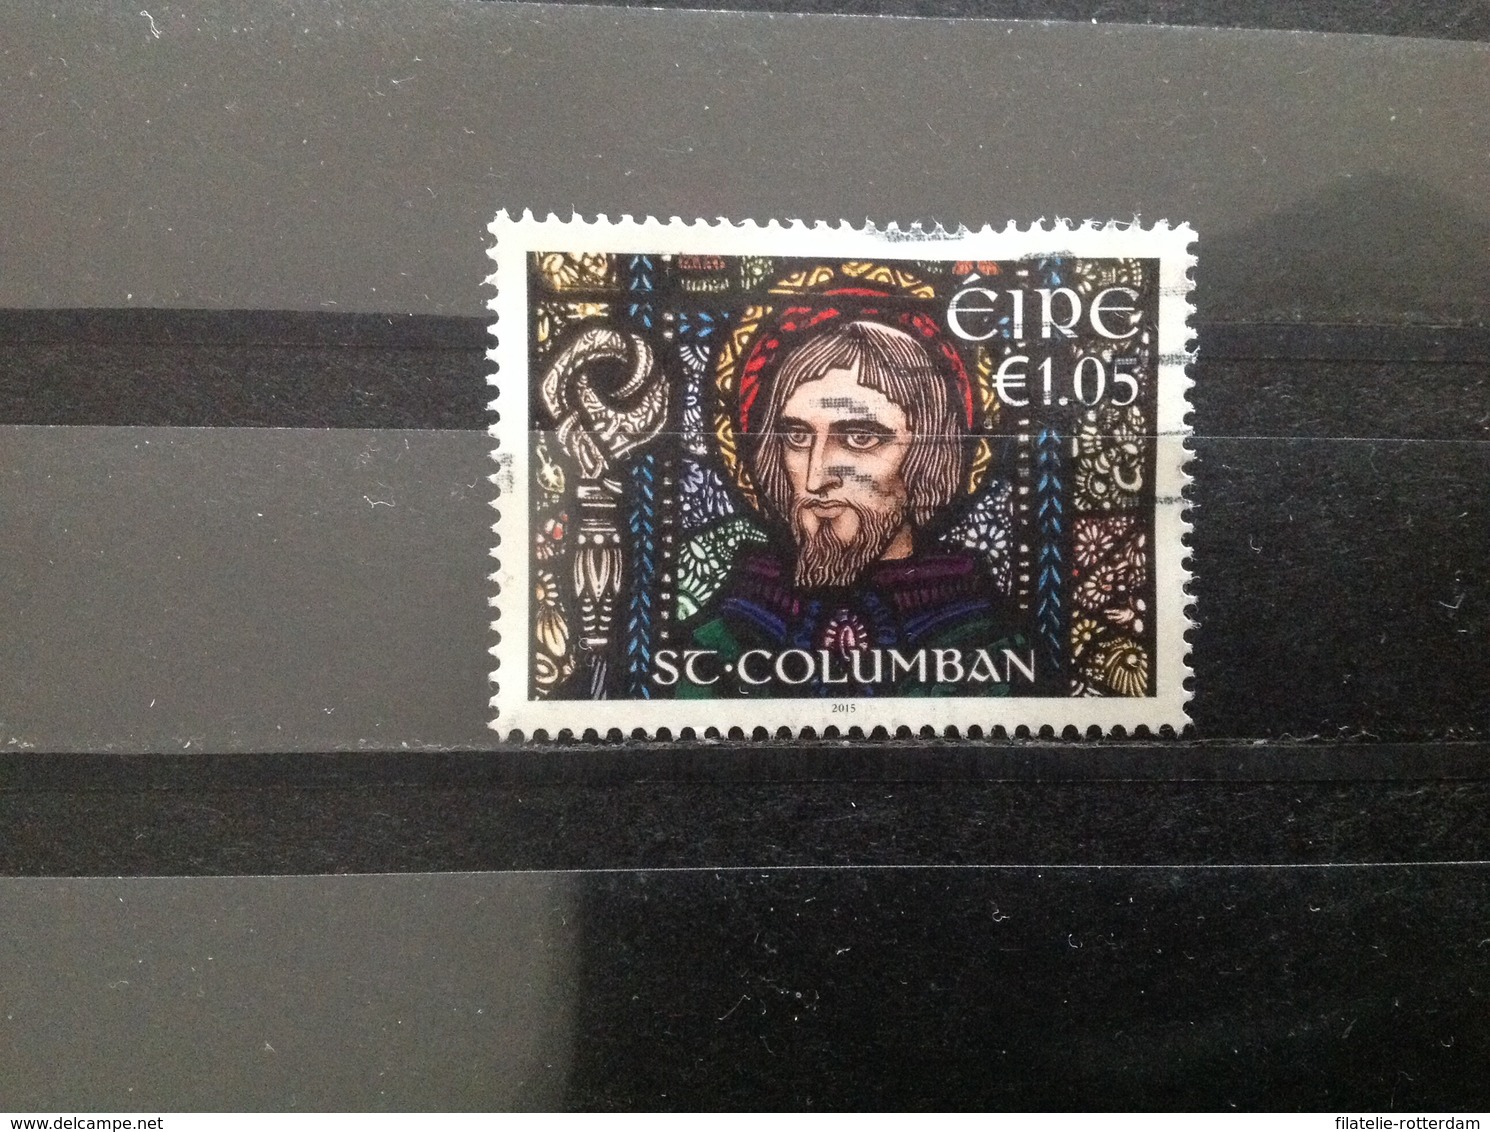 Ierland / Ireland - Sterfdag St. Columban (1.05) 2015 - Gebruikt